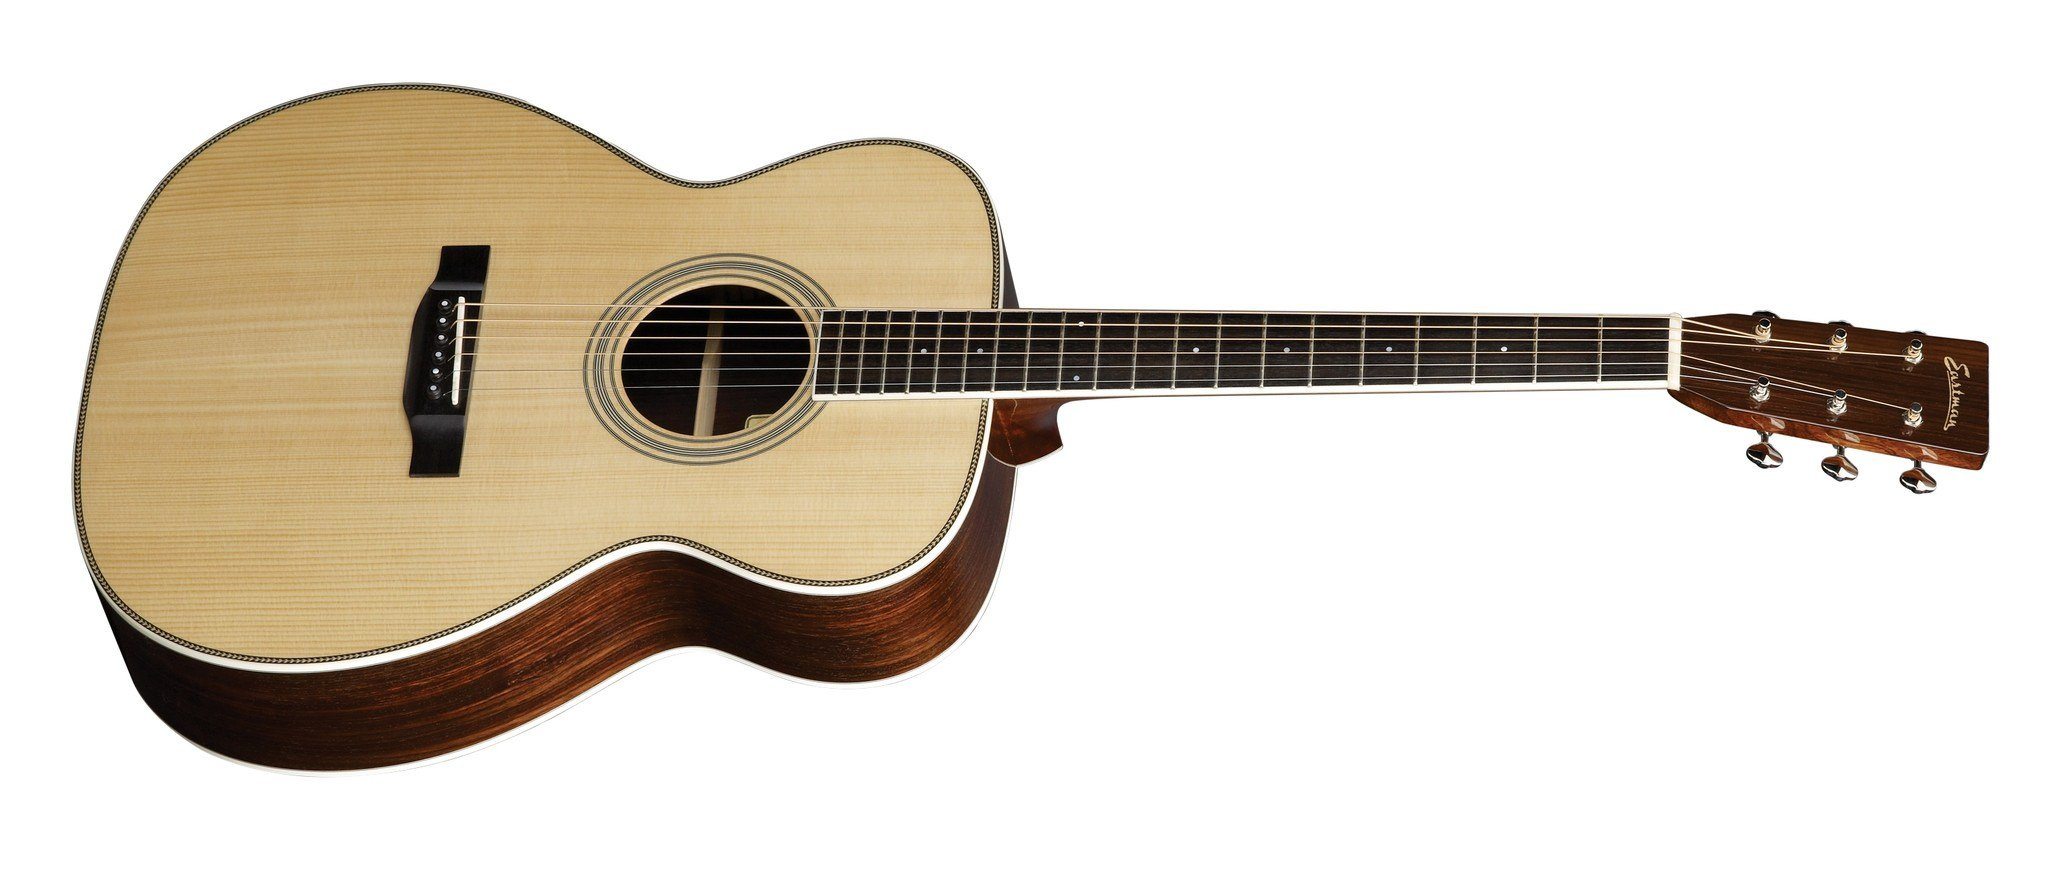 Eastman E20 OM Orchestra model, Acoustic Guitar for sale at Richards Guitars.